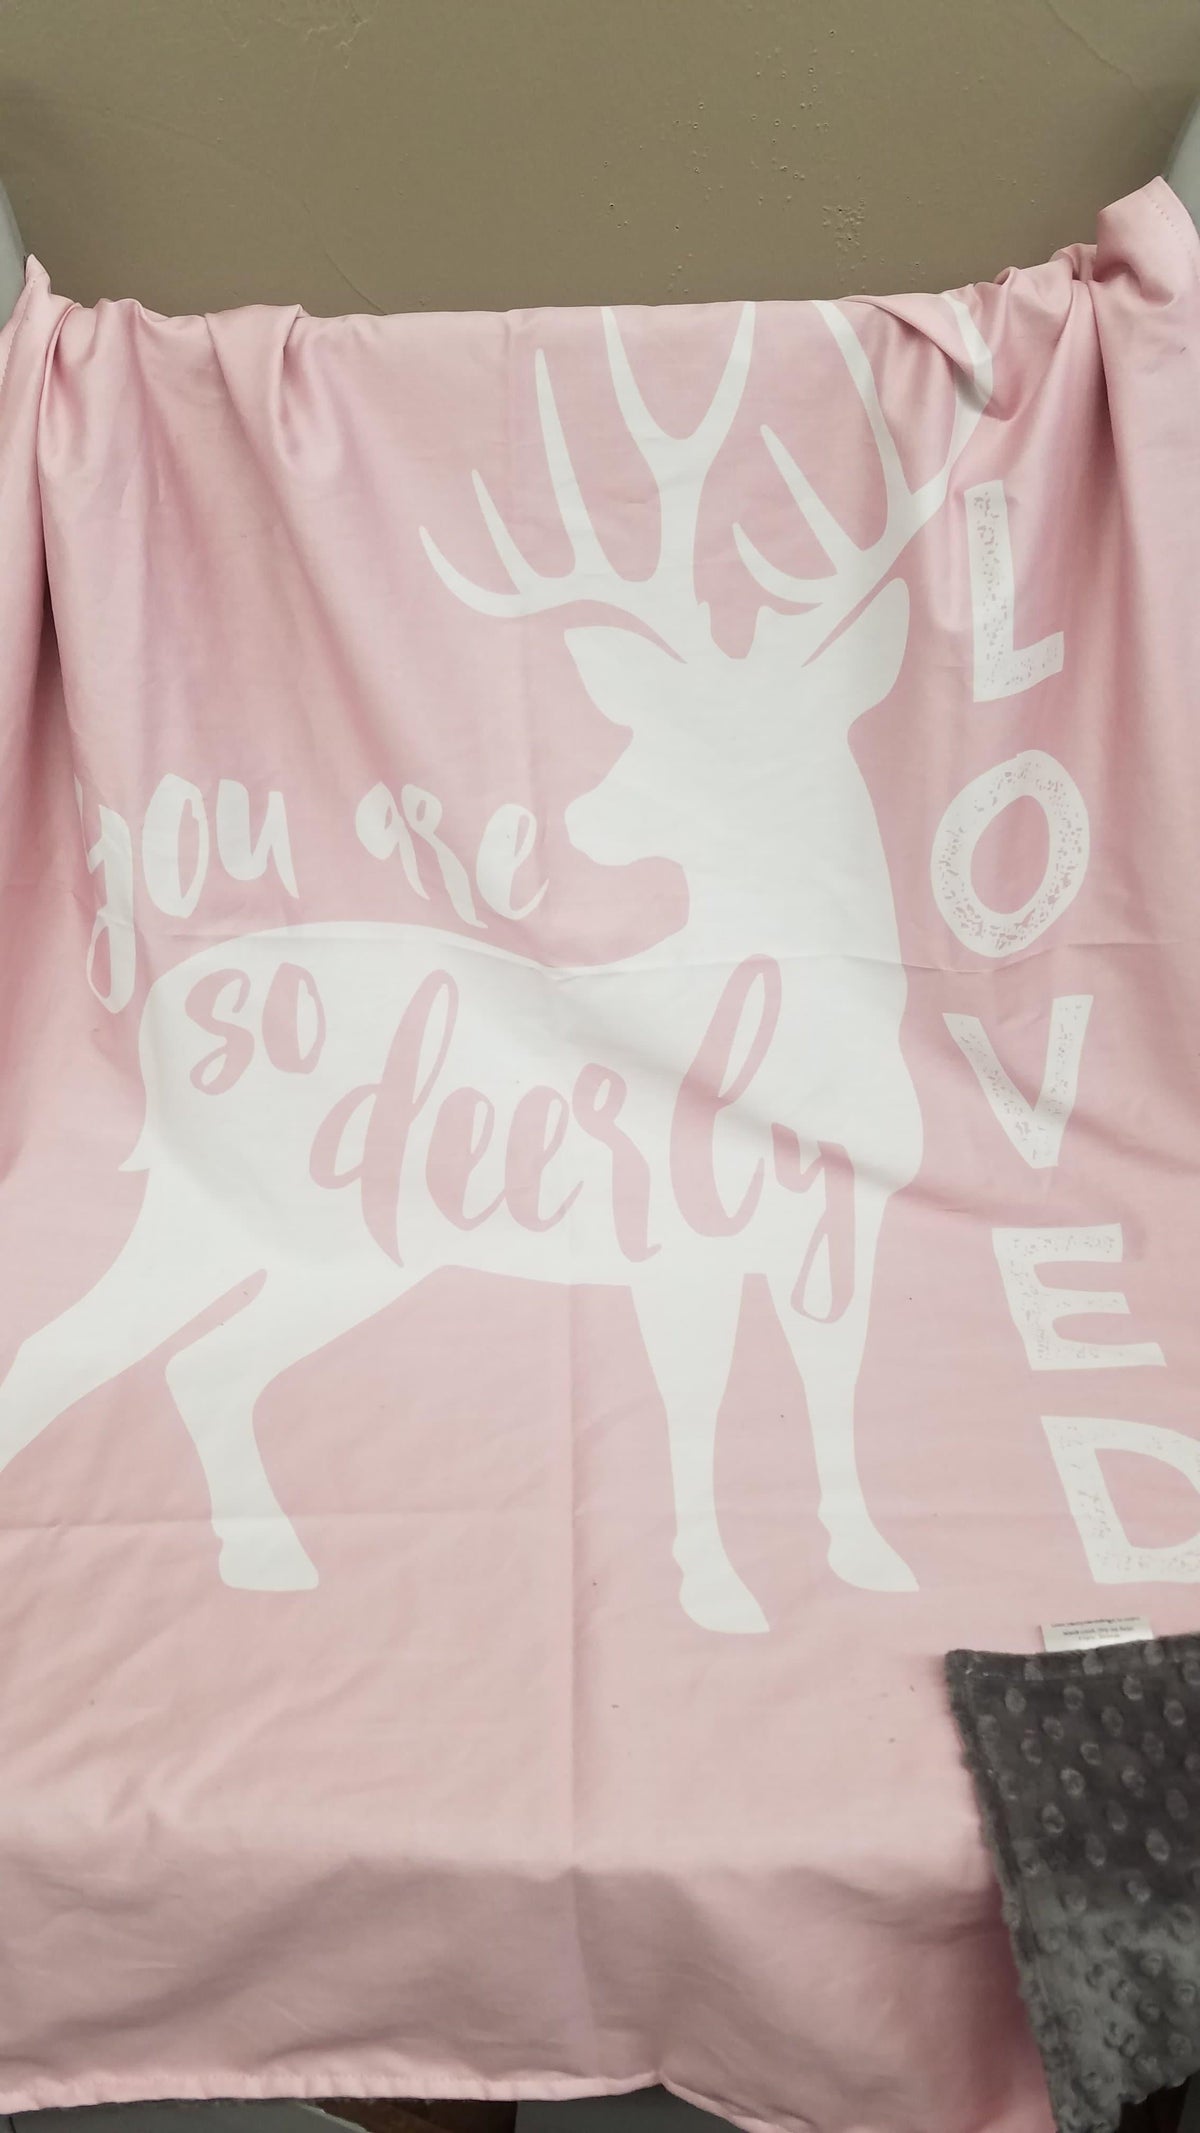 Standard Blanket - You Are So Deerly Loved  Deer Blanket, light pink - DBC Baby Bedding Co 